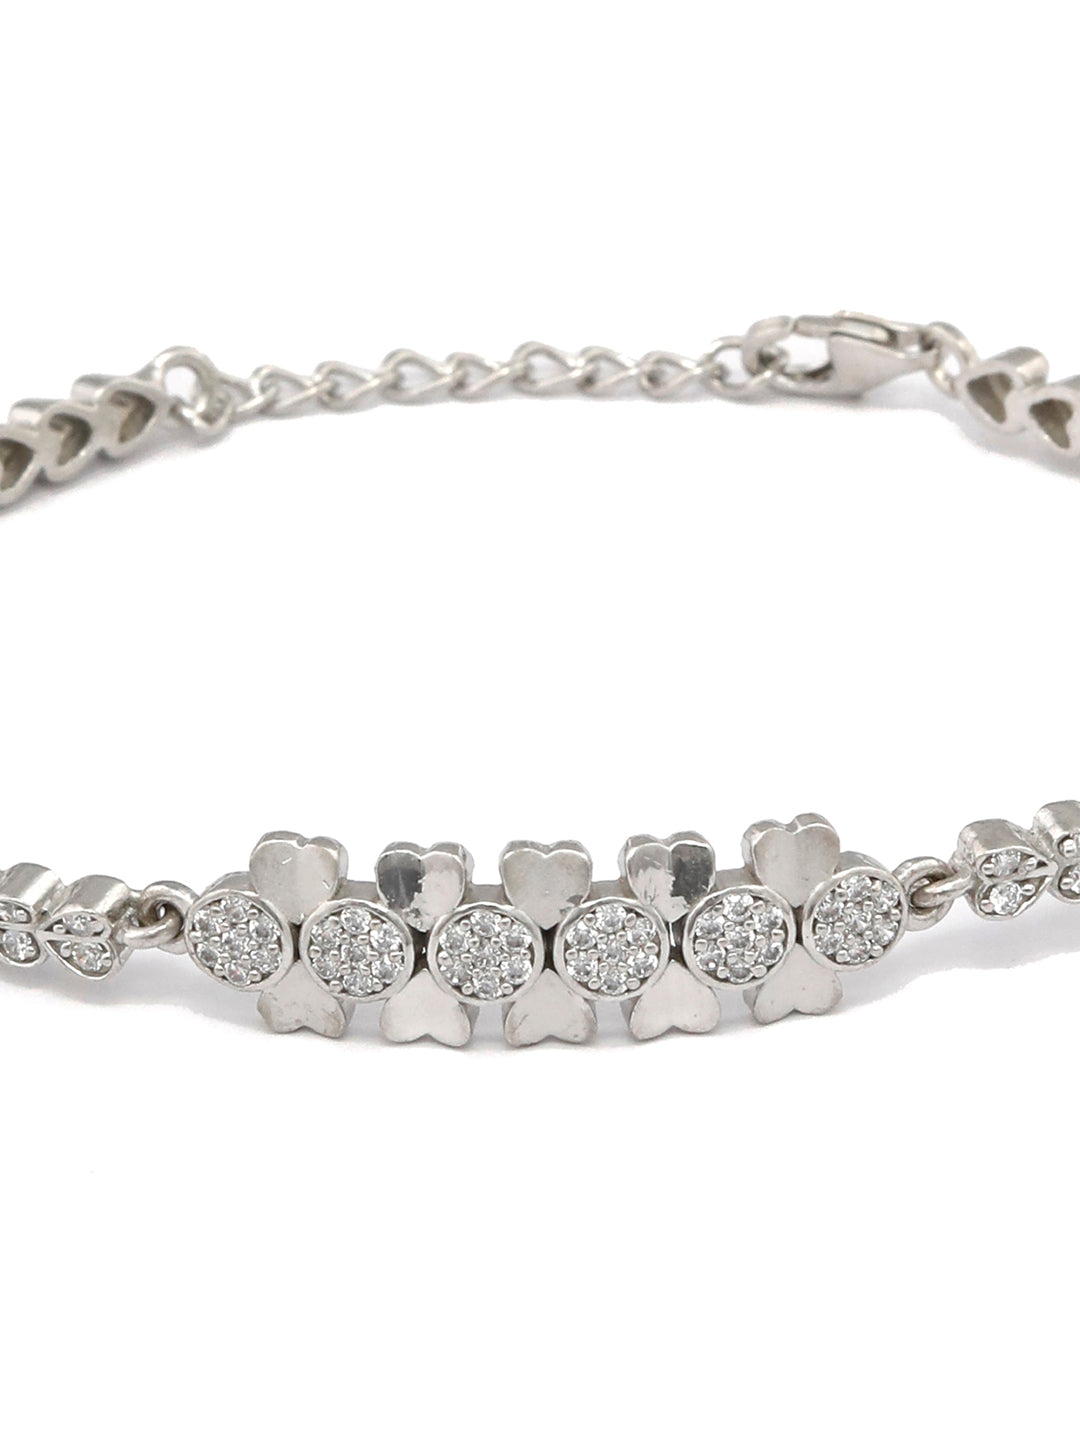 Floral American Diamond Studded Sterling Silver Bracelet